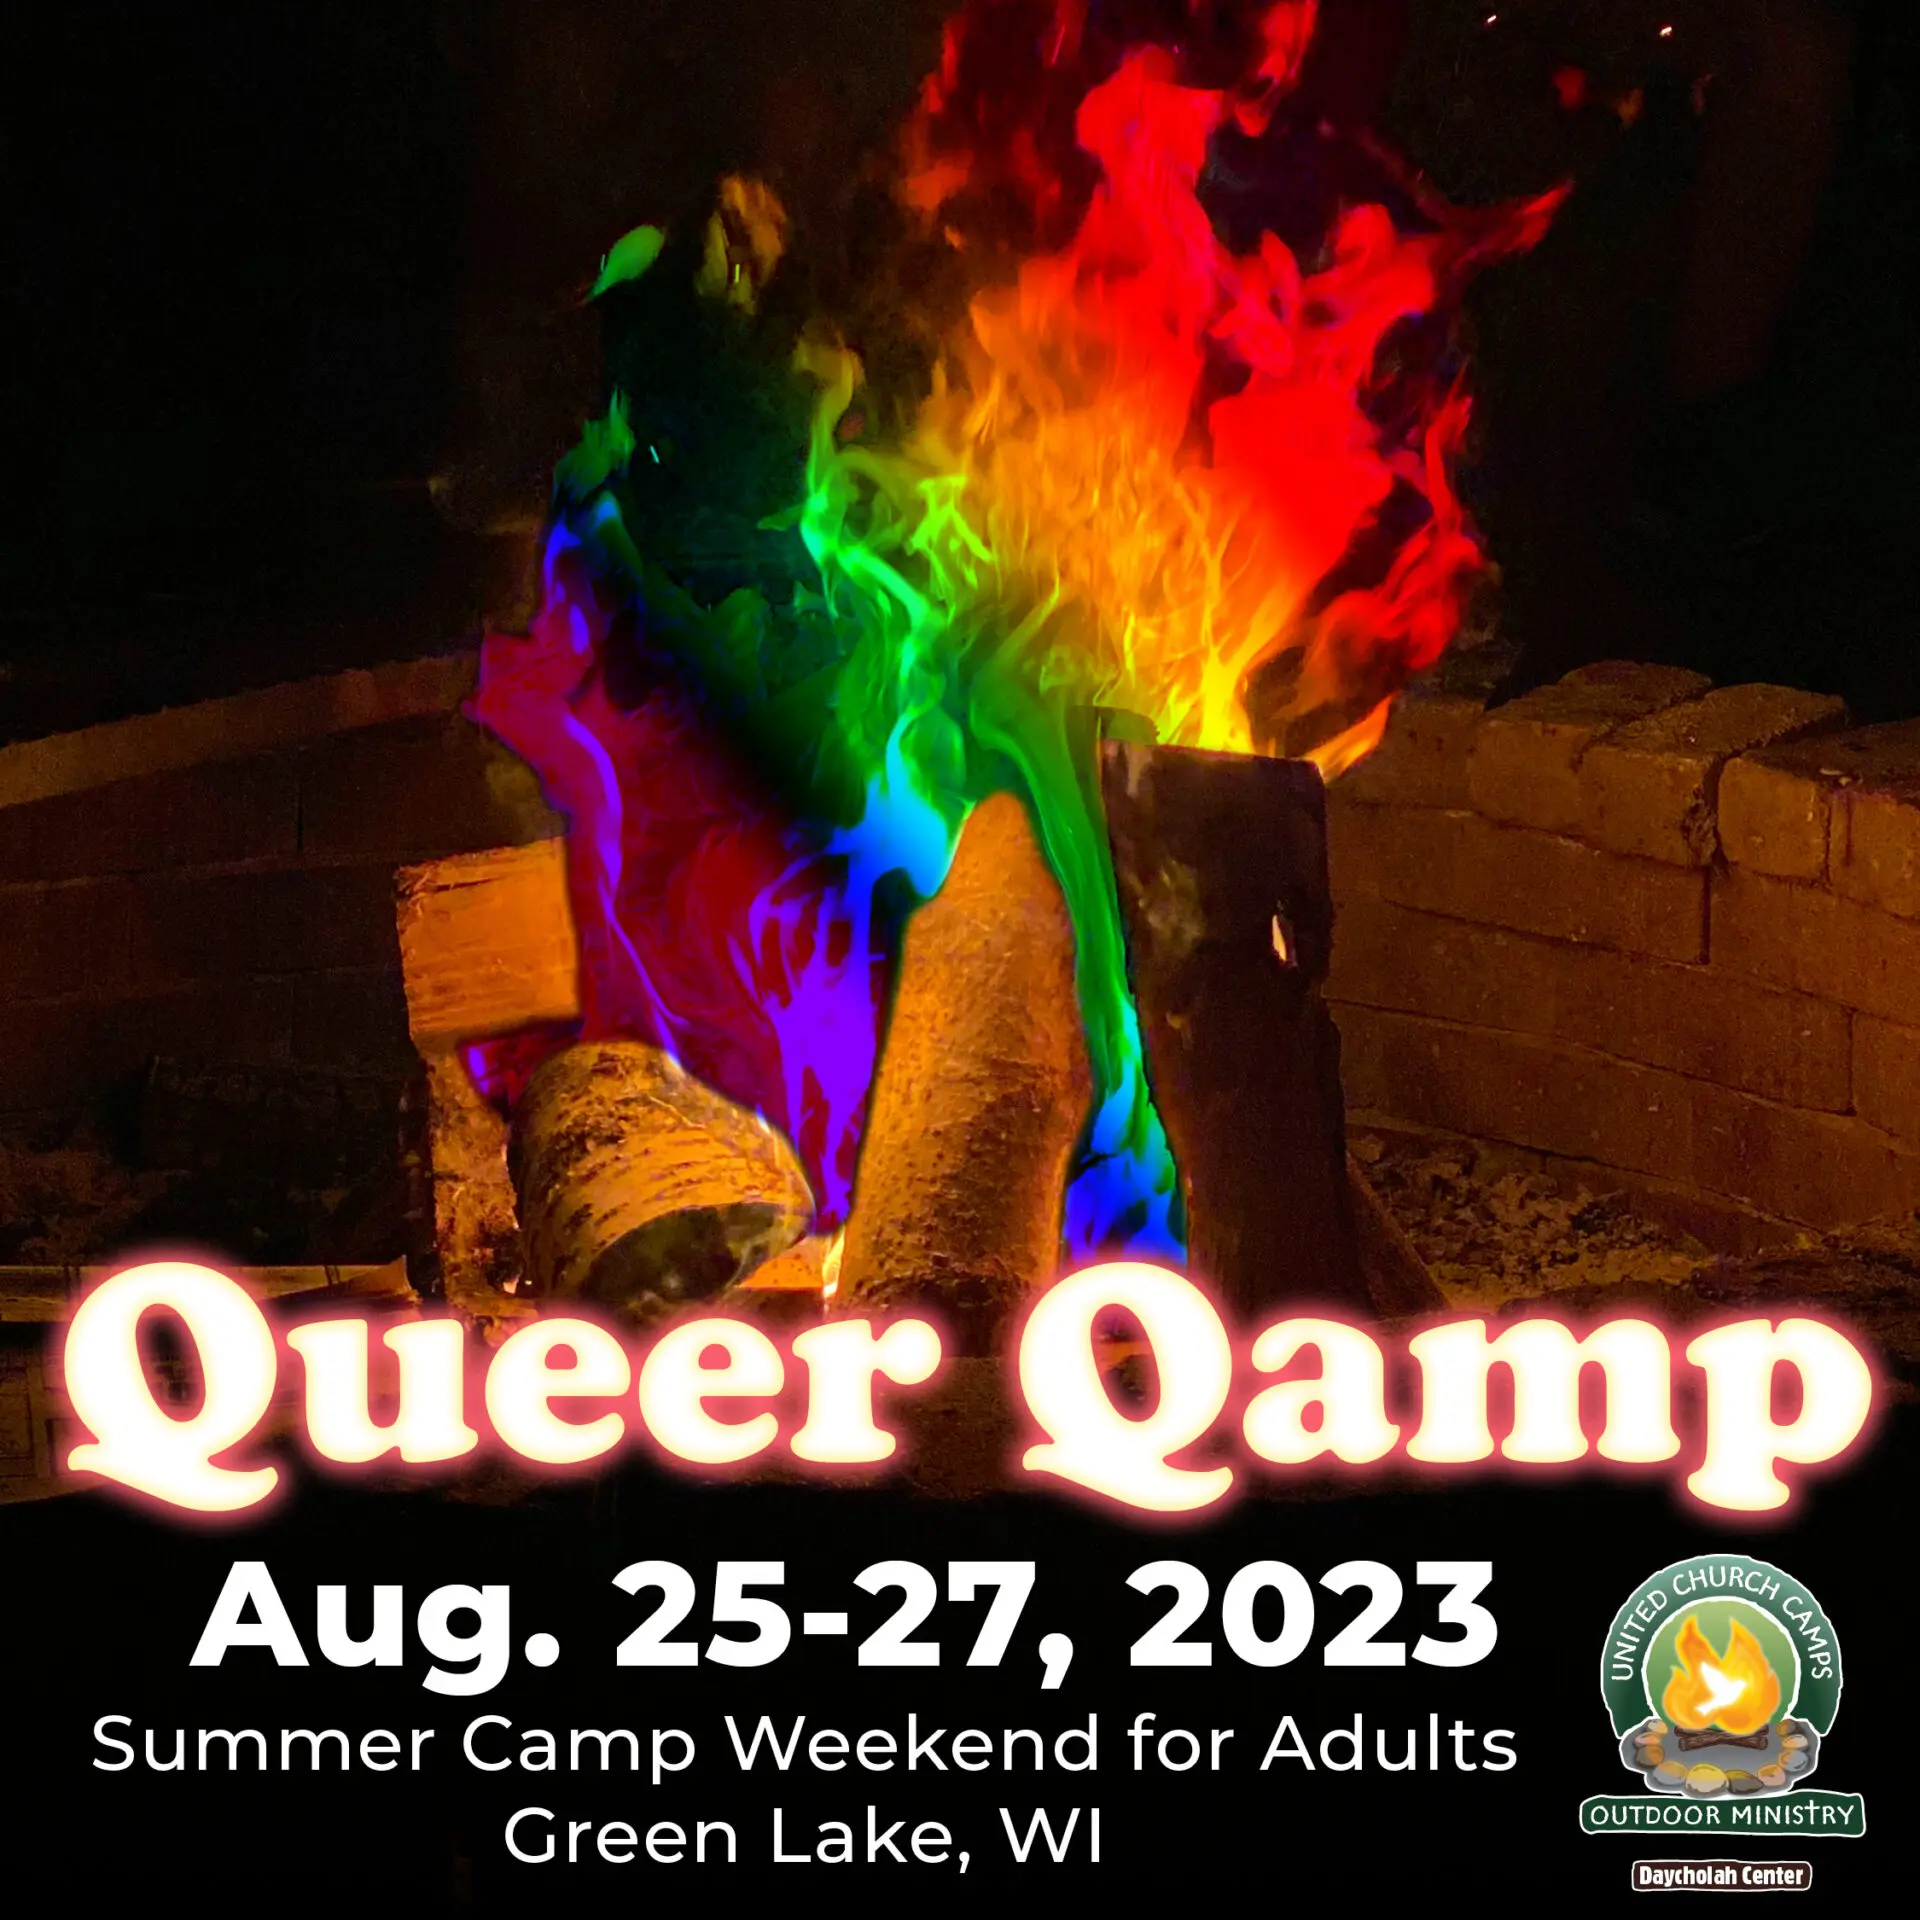 https://ourliveswisconsin.com/wp-content/uploads/2023/08/DC-Queer-Qamp_1x1_v2.jpg.webp